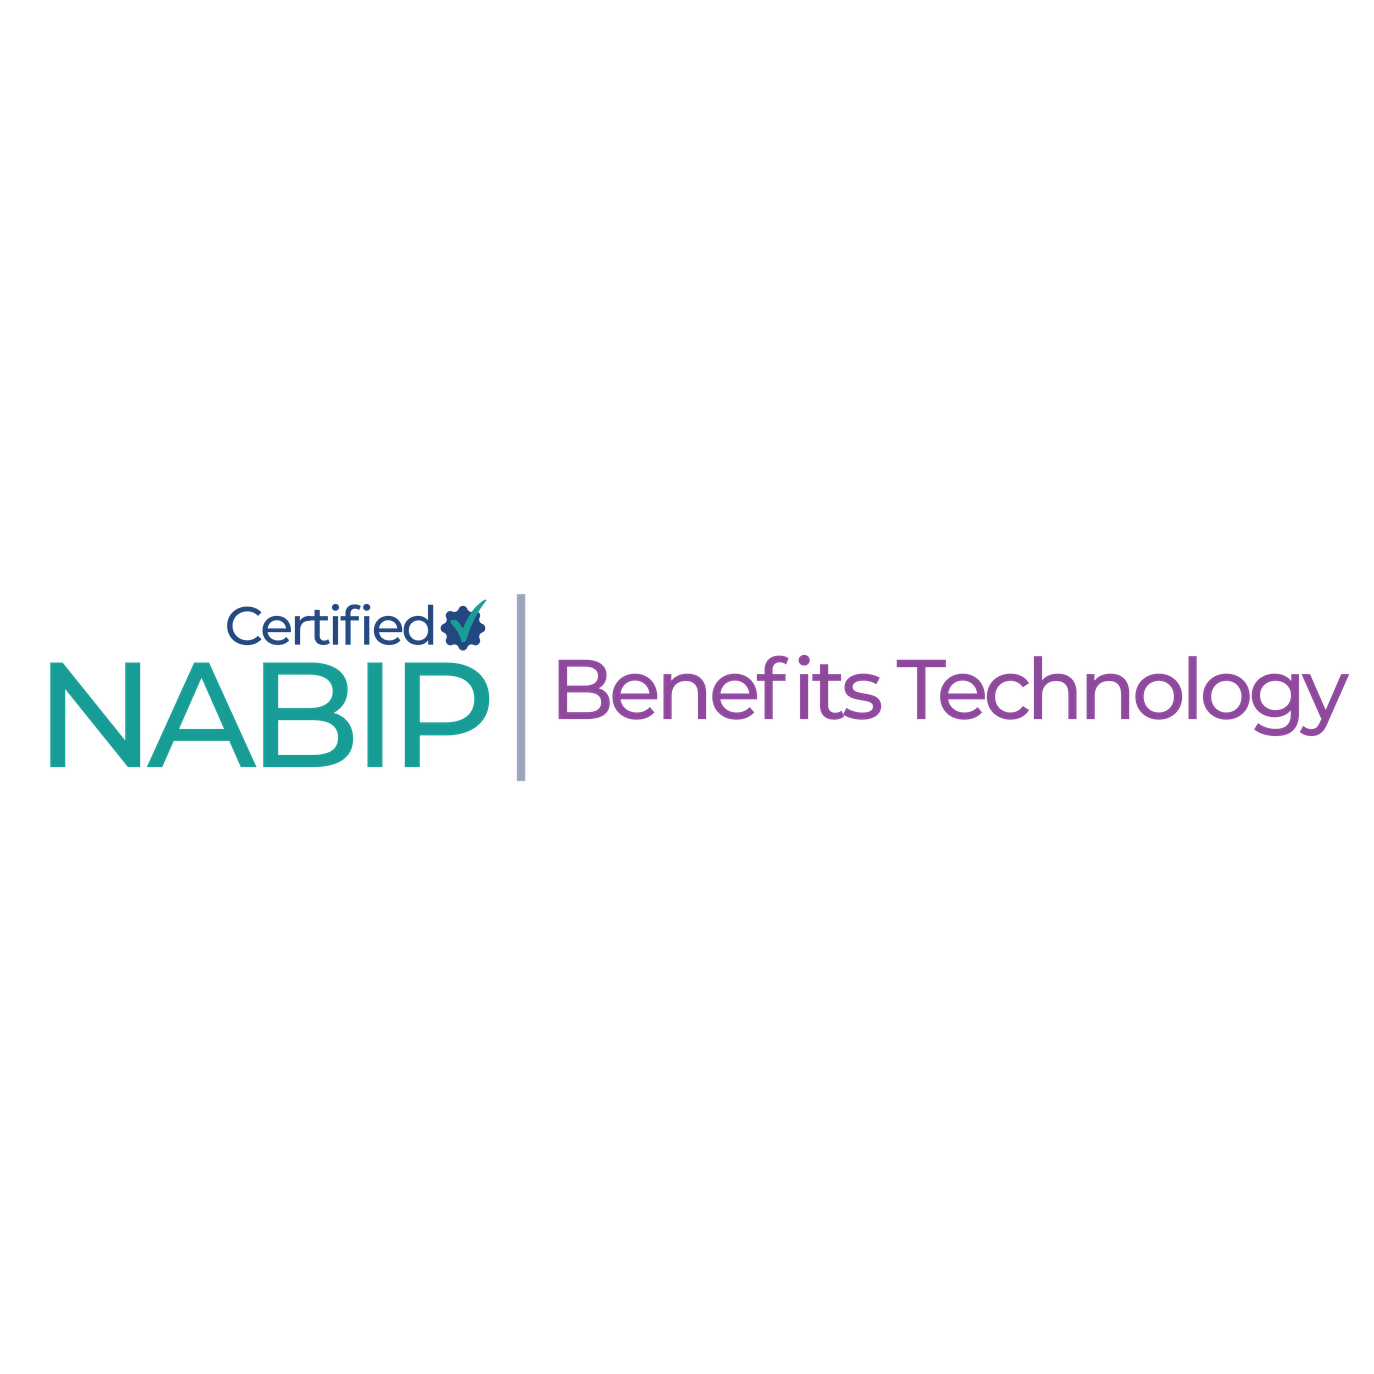 NABIP Course Logos No Background Benefits Technology Square